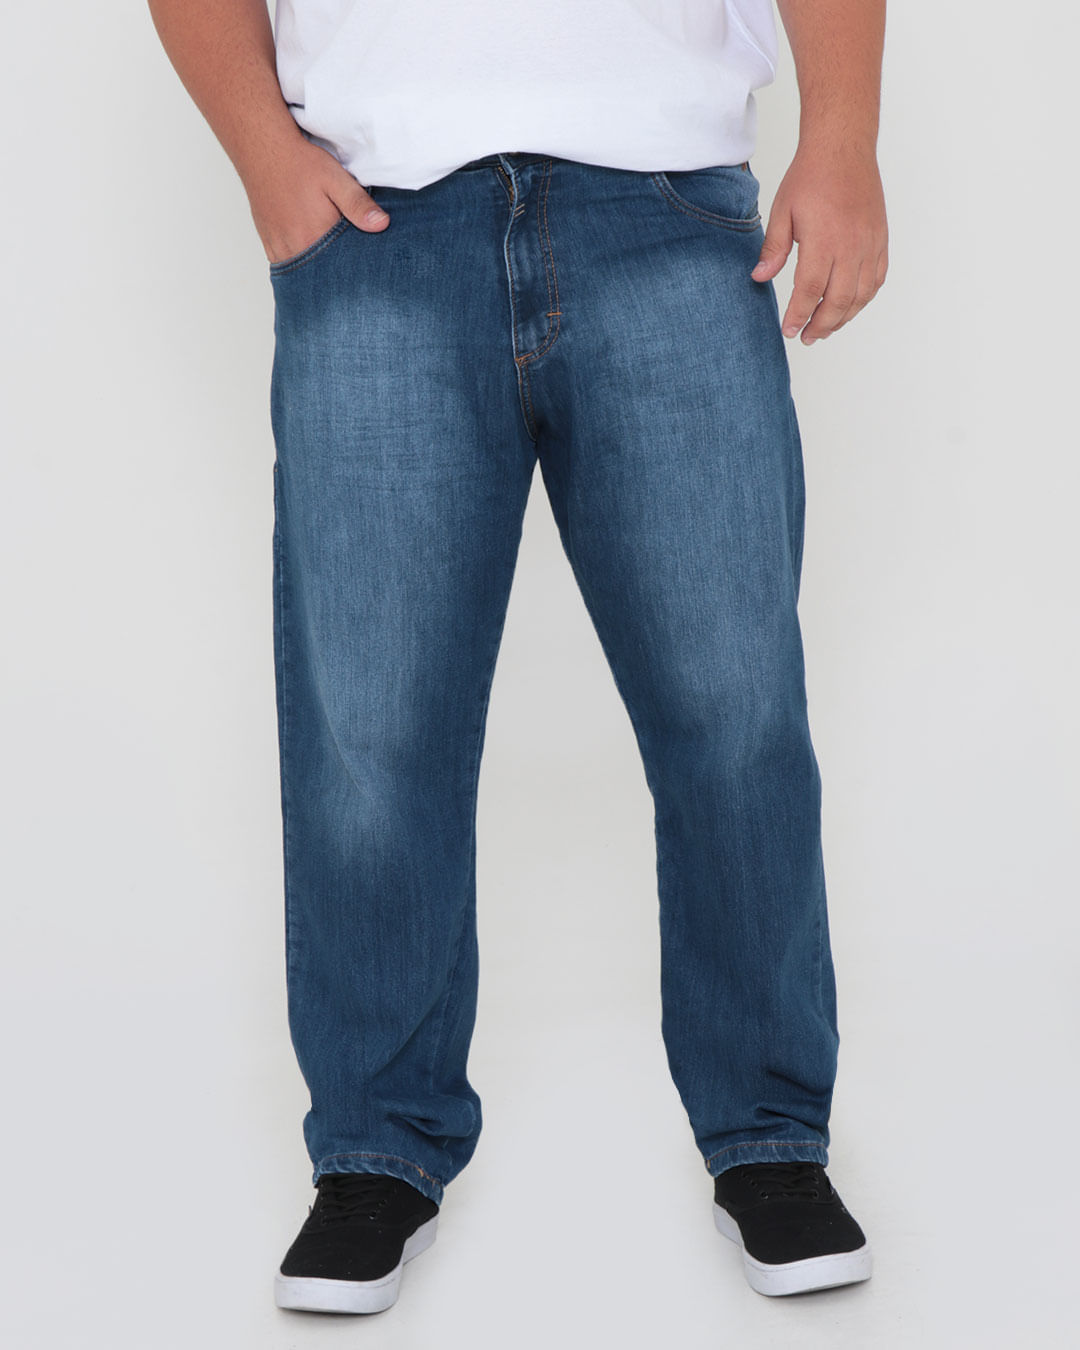 23321000197045-blue-jeans-medio-1